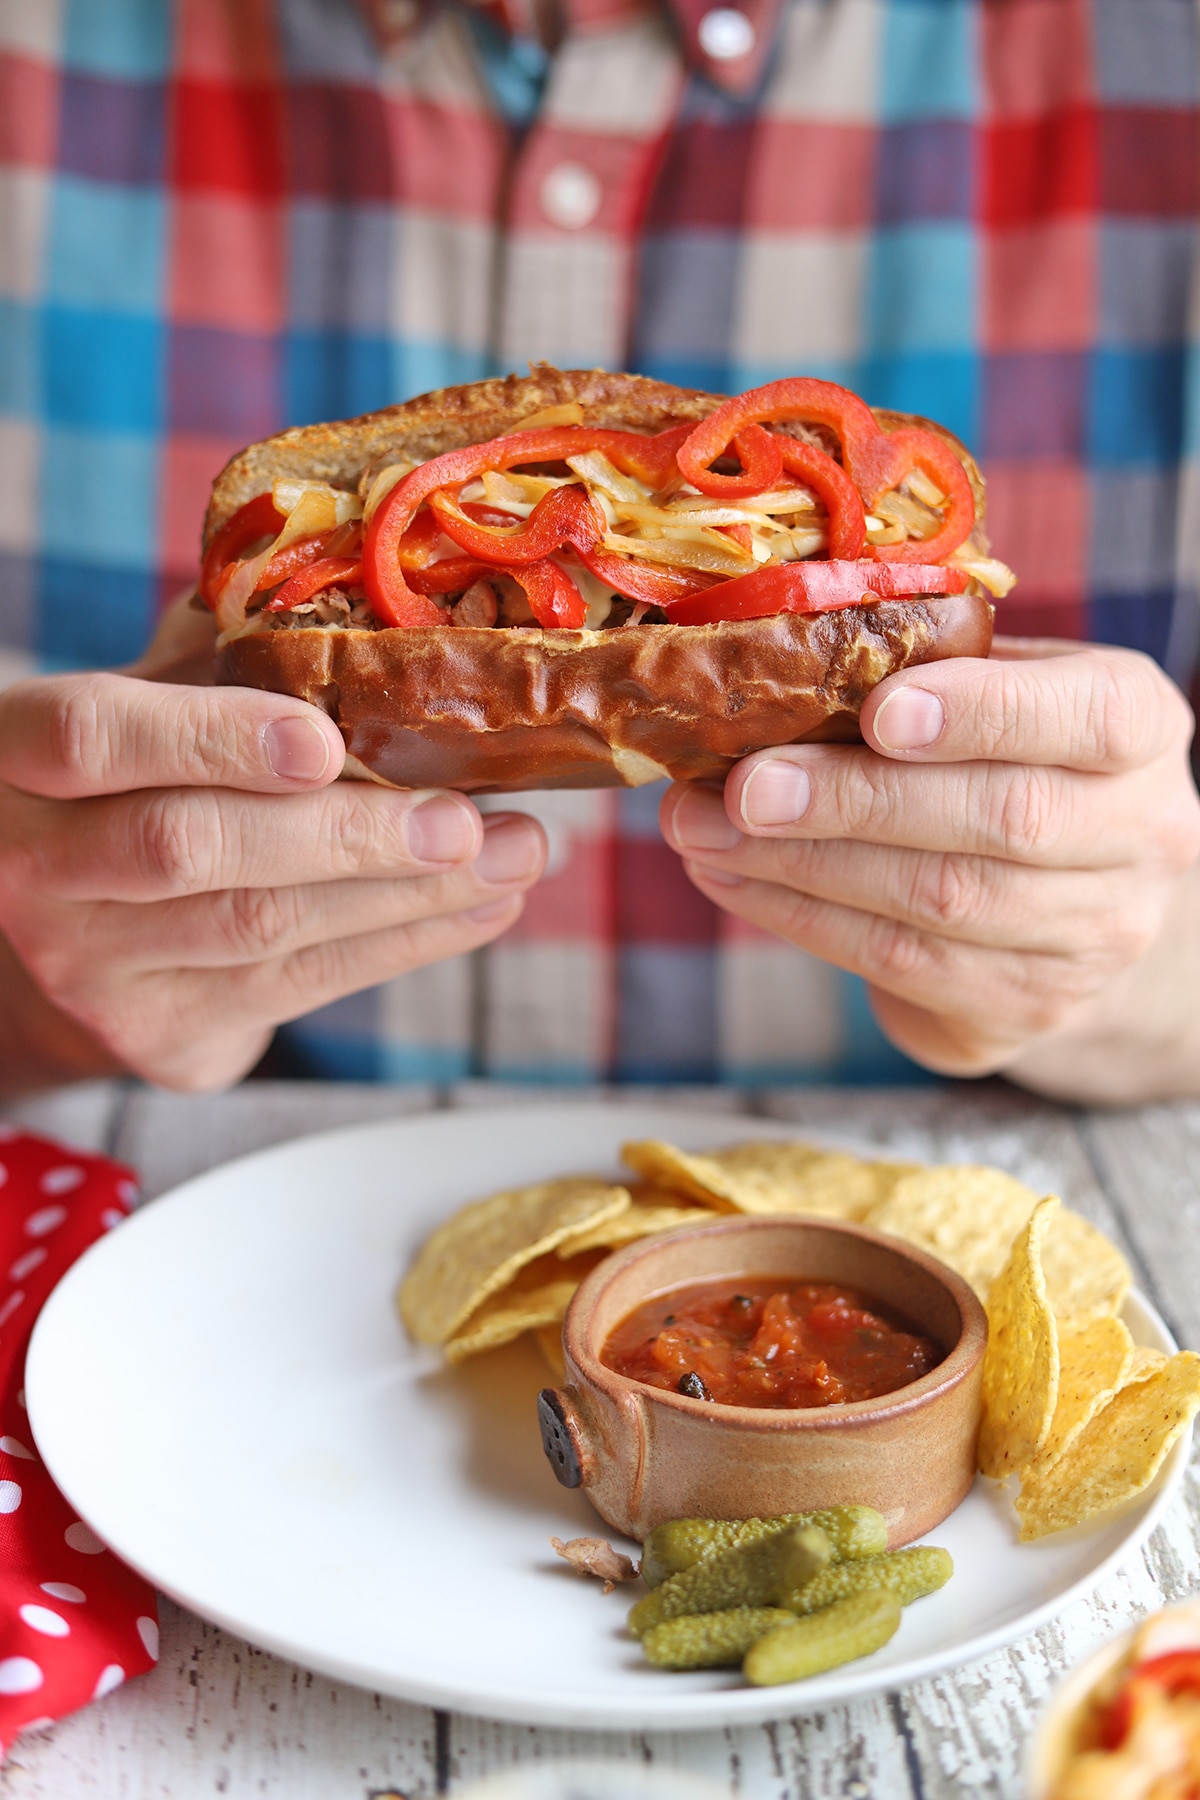 Hands holding vegan steak and cheese sandwich.